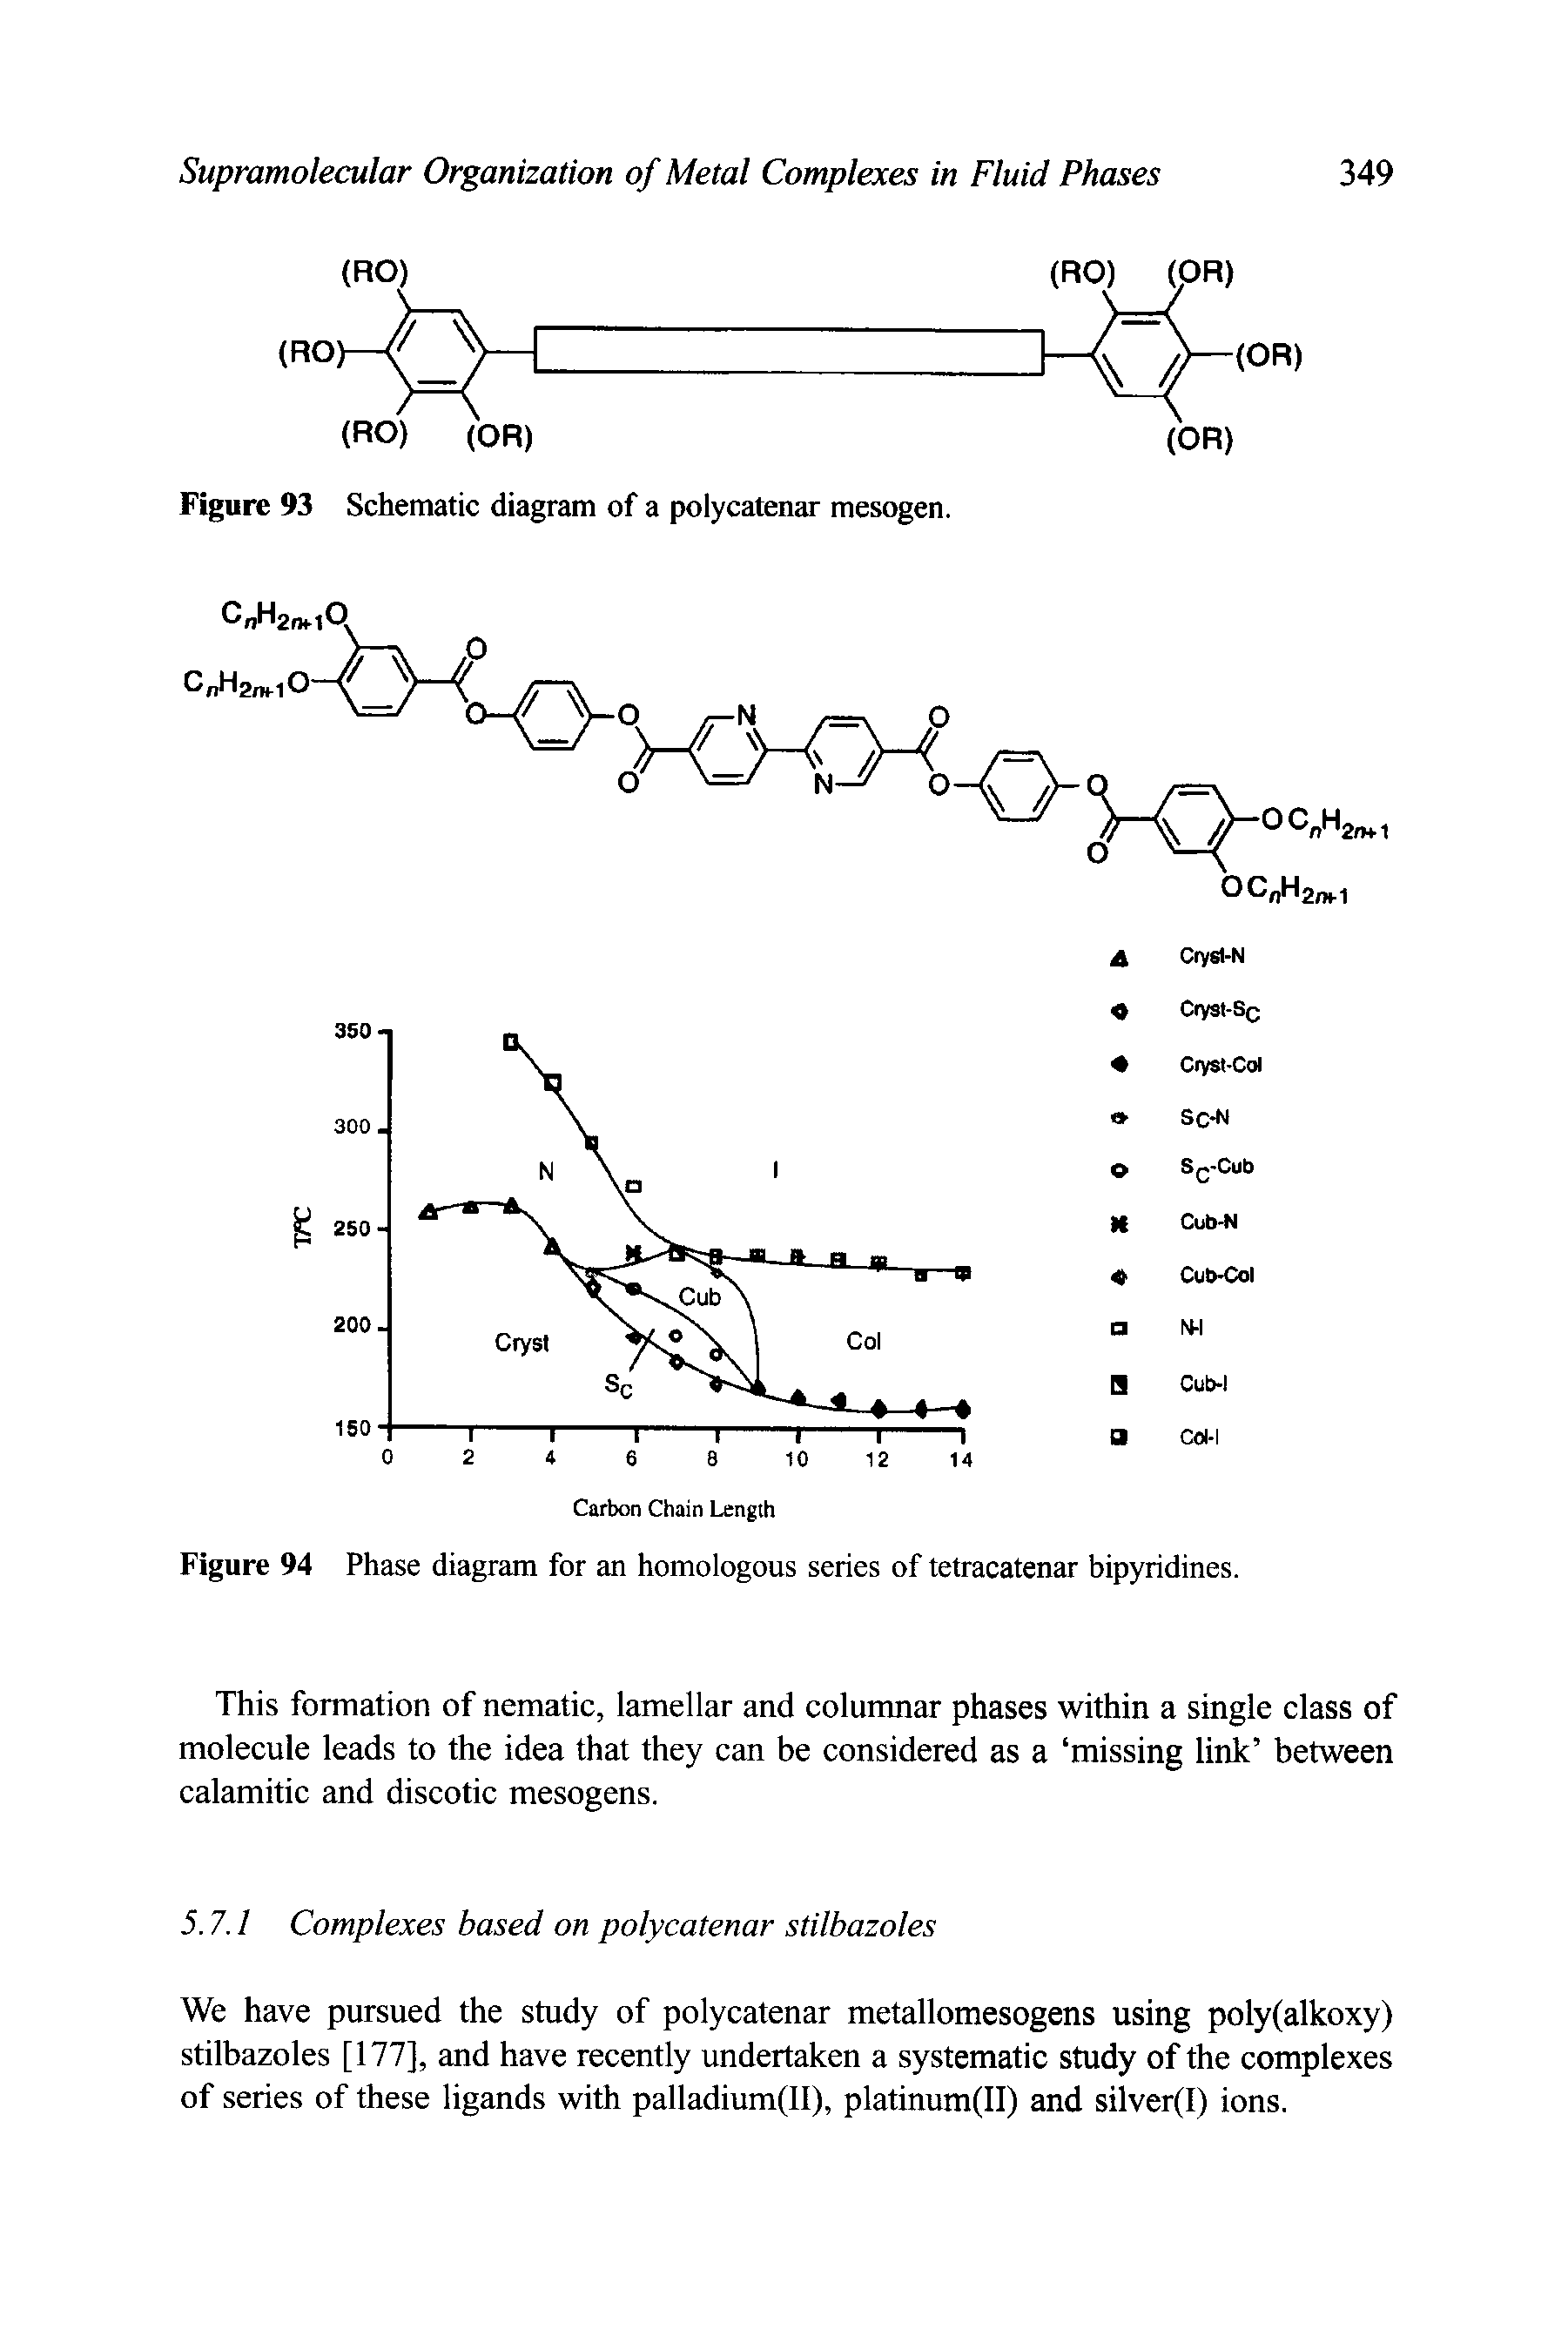 Figure 94 Phase diagram for an homologous series of tetracatenar bipyridines.